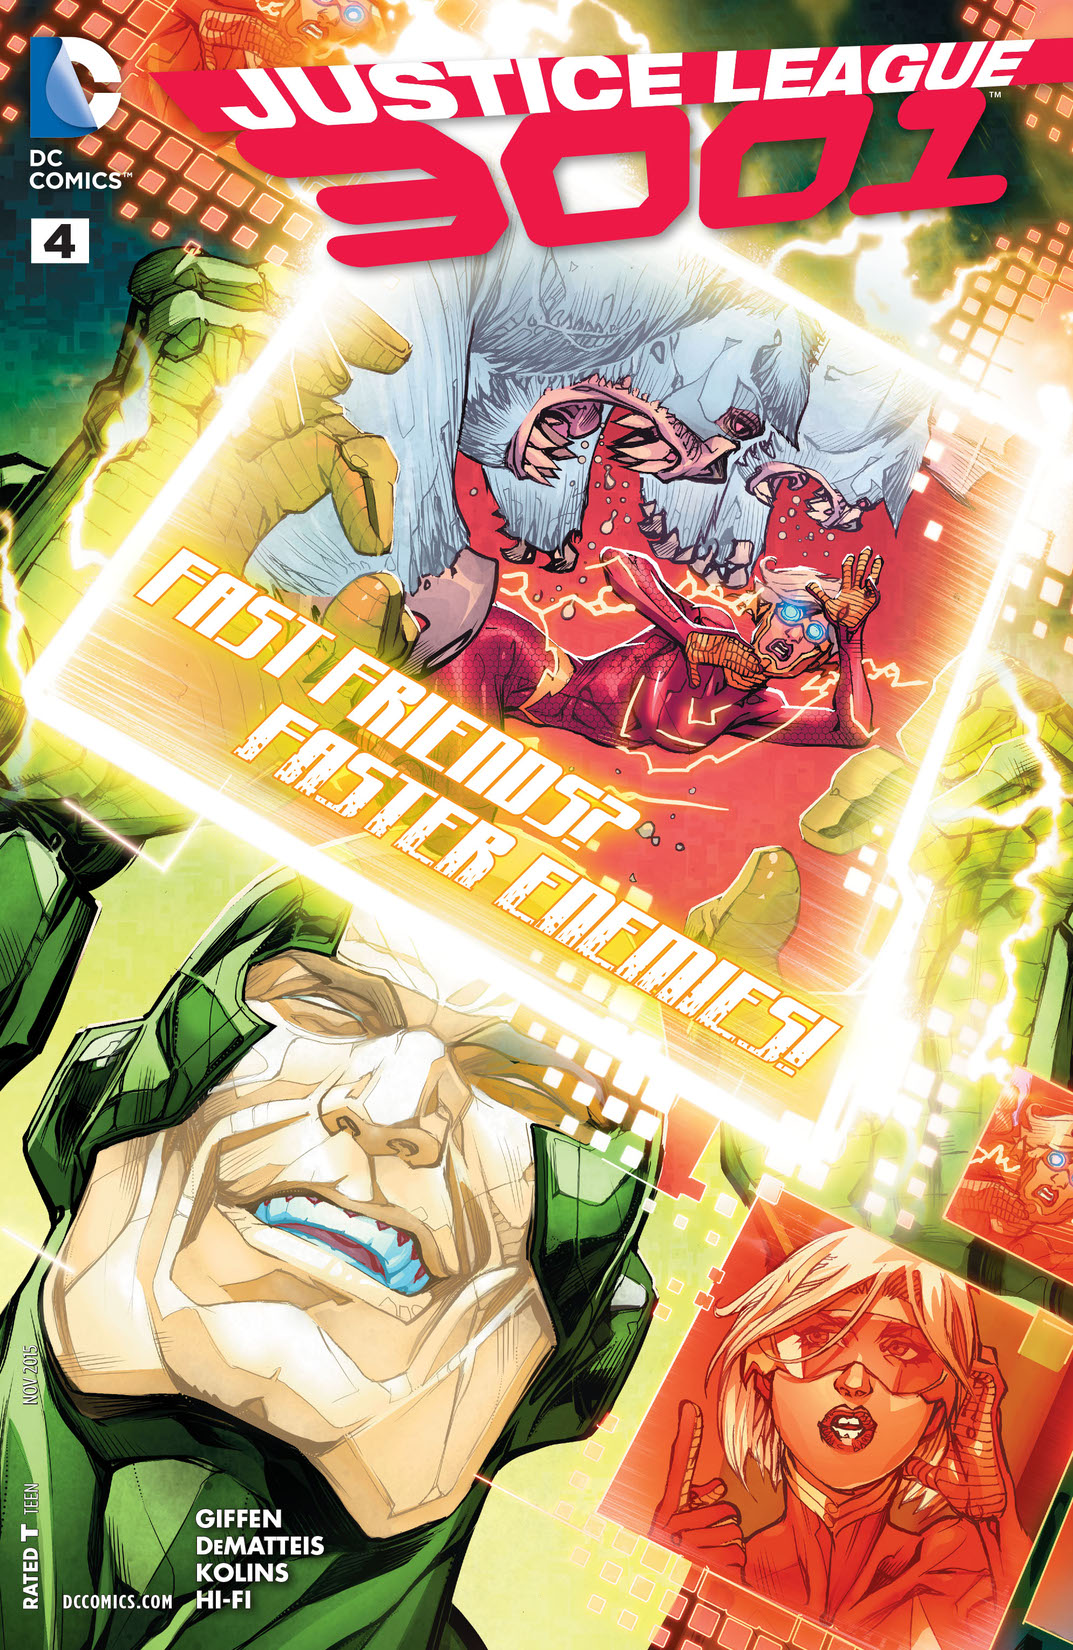 Justice League 3001 #4 preview images